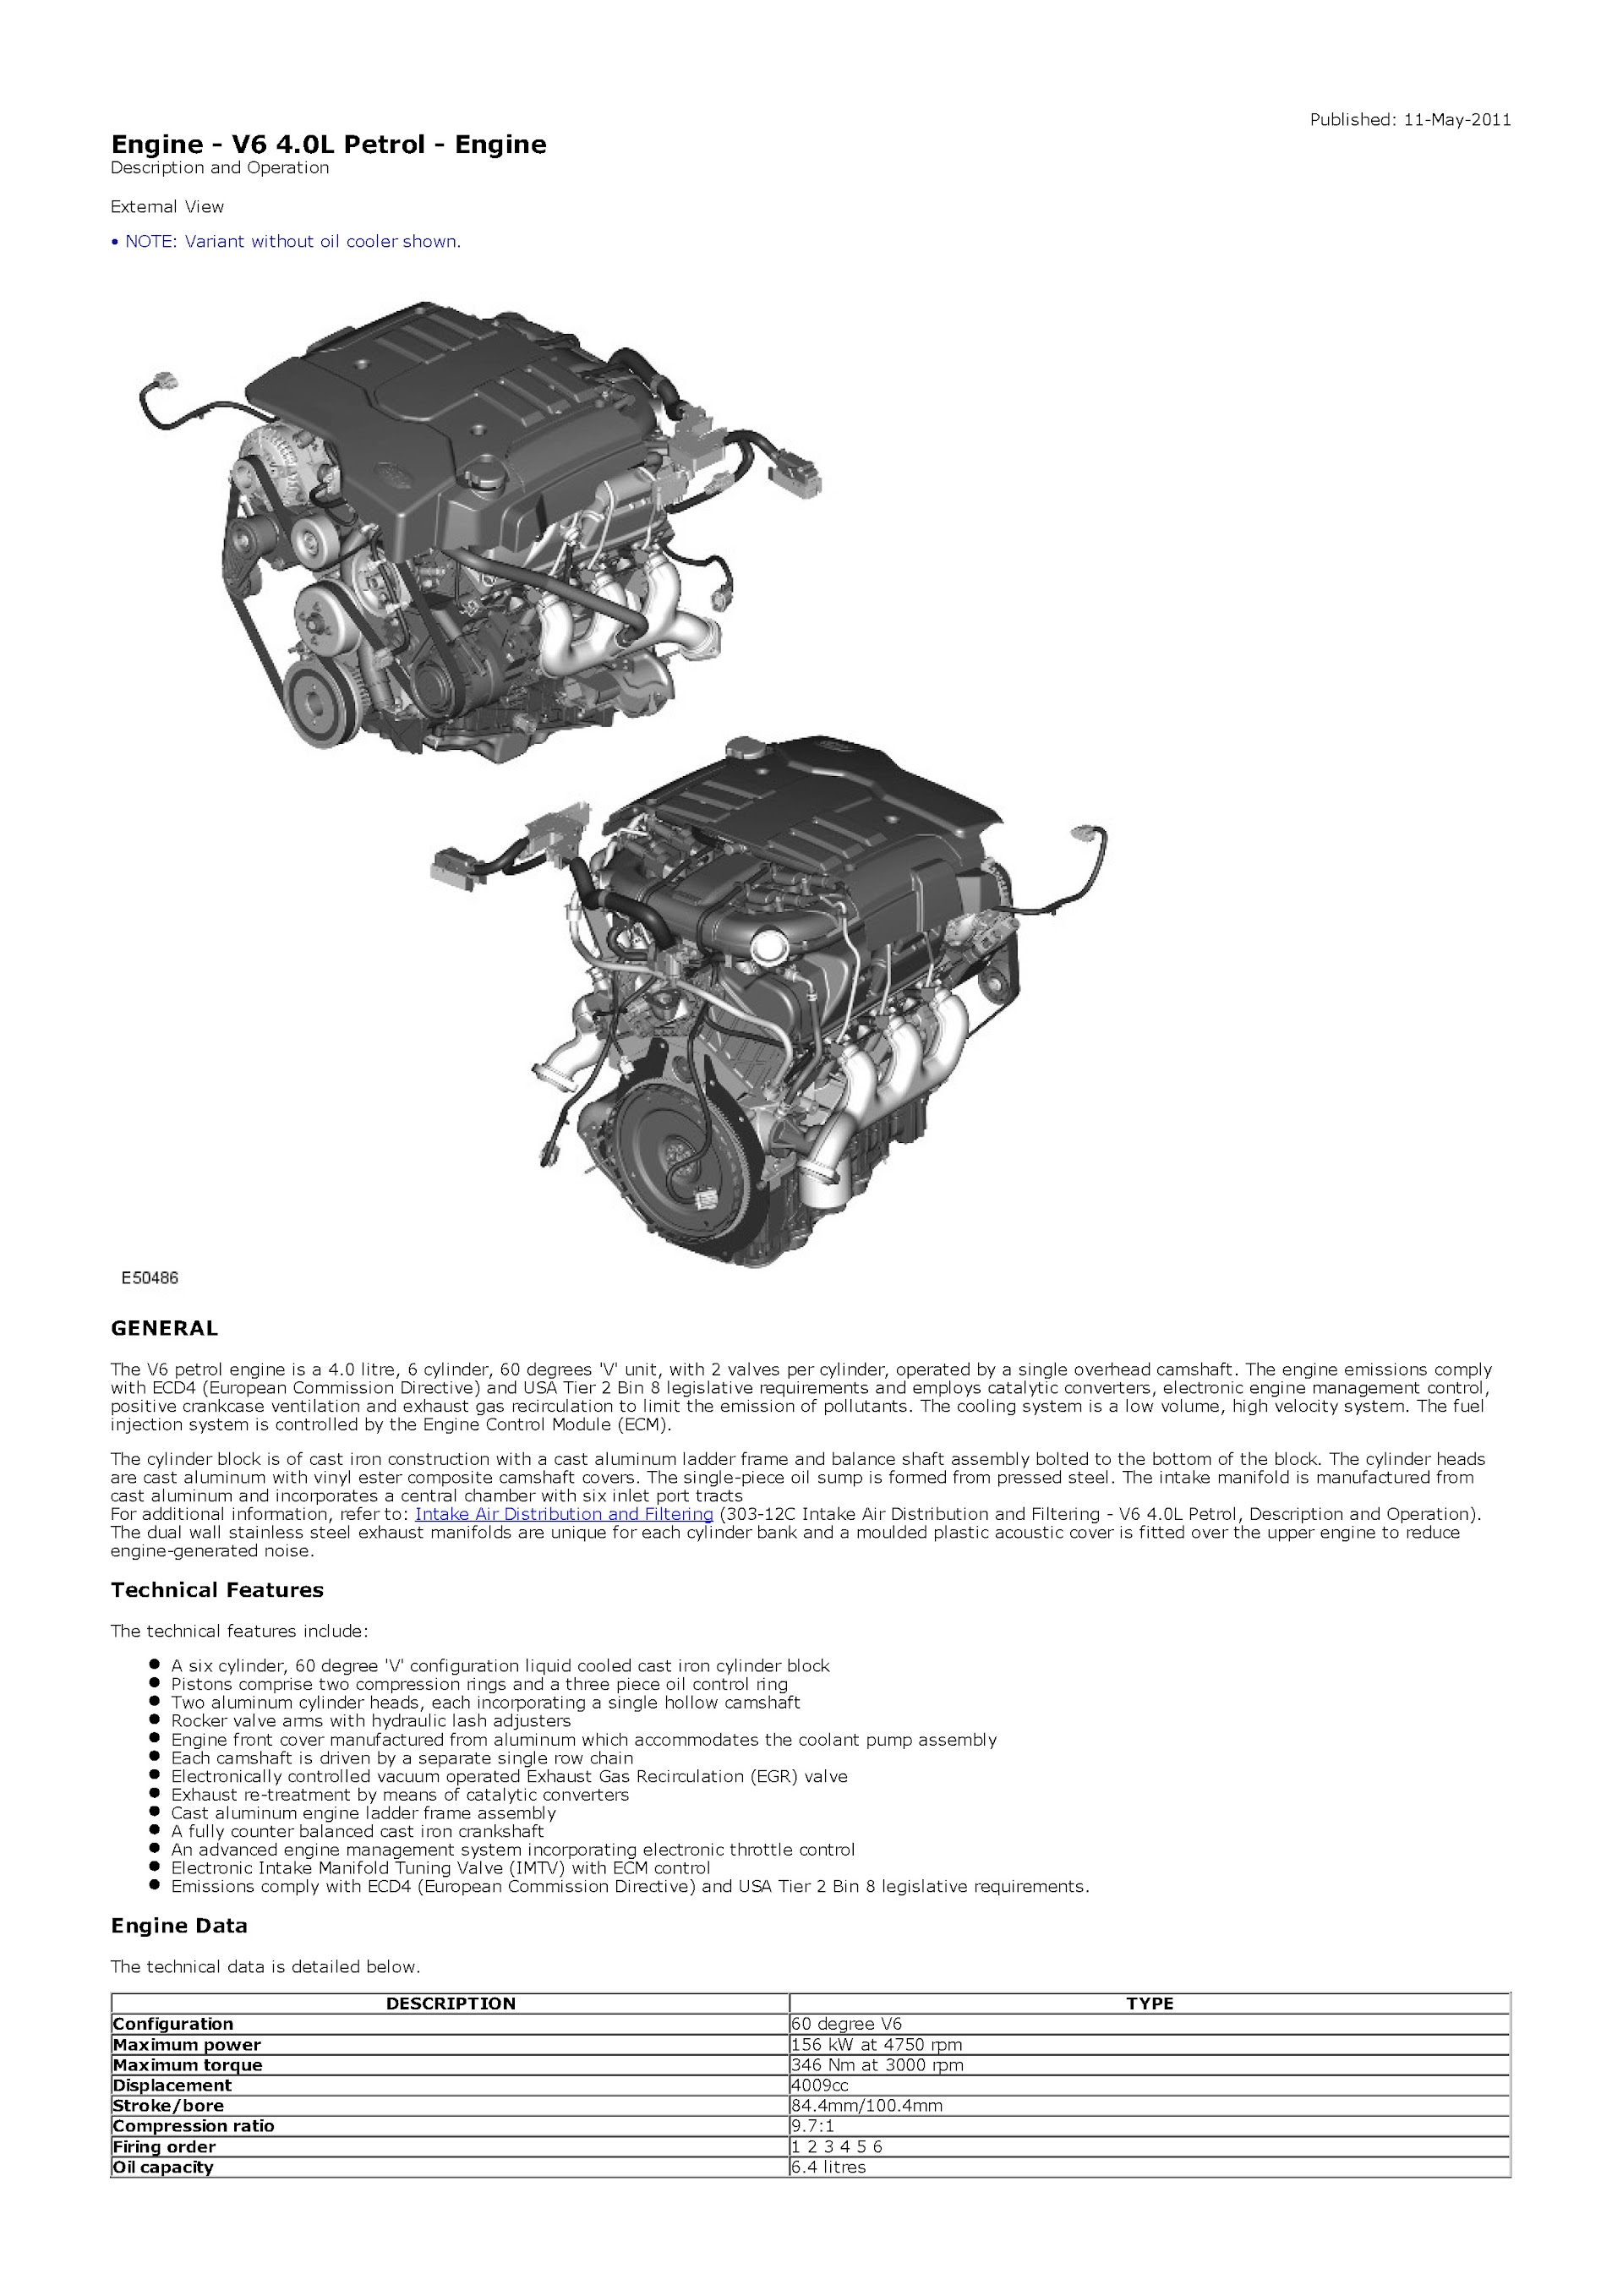 2009-2011 Land Rover Discovery 4 Repair Manual, Engine V6 4.6L Petrol